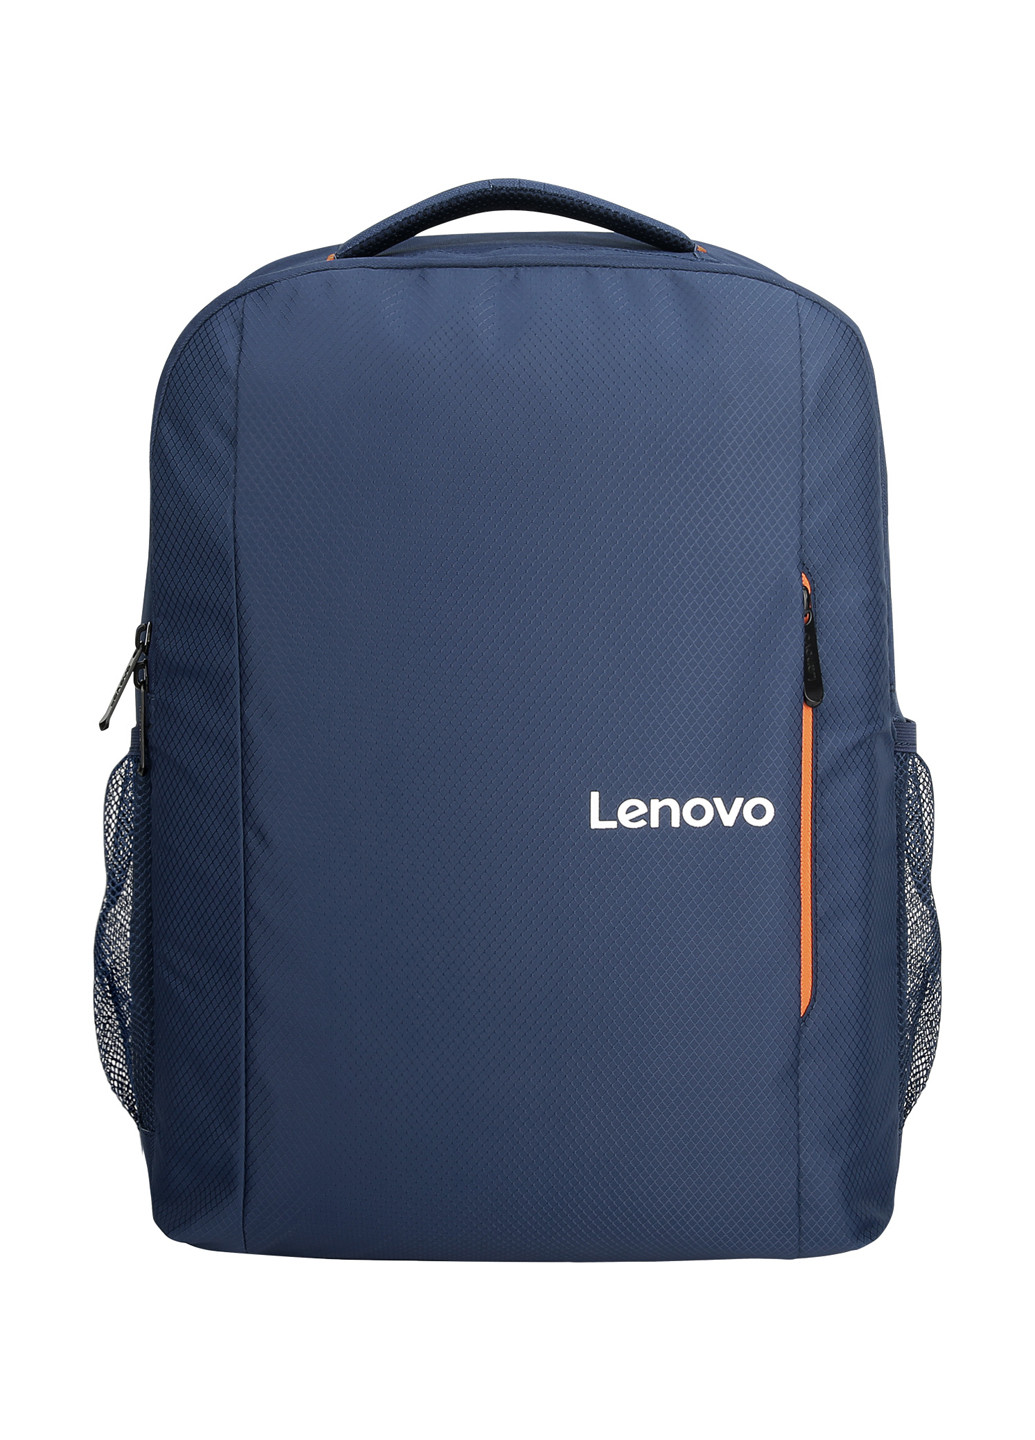 Рюкзак 15.6 Laptop Everyday Backpack B515 Blue-ROW (GX40Q75216) Lenovo laptop everyday backpack 15.6 blue (gx40q75216) (137227685)